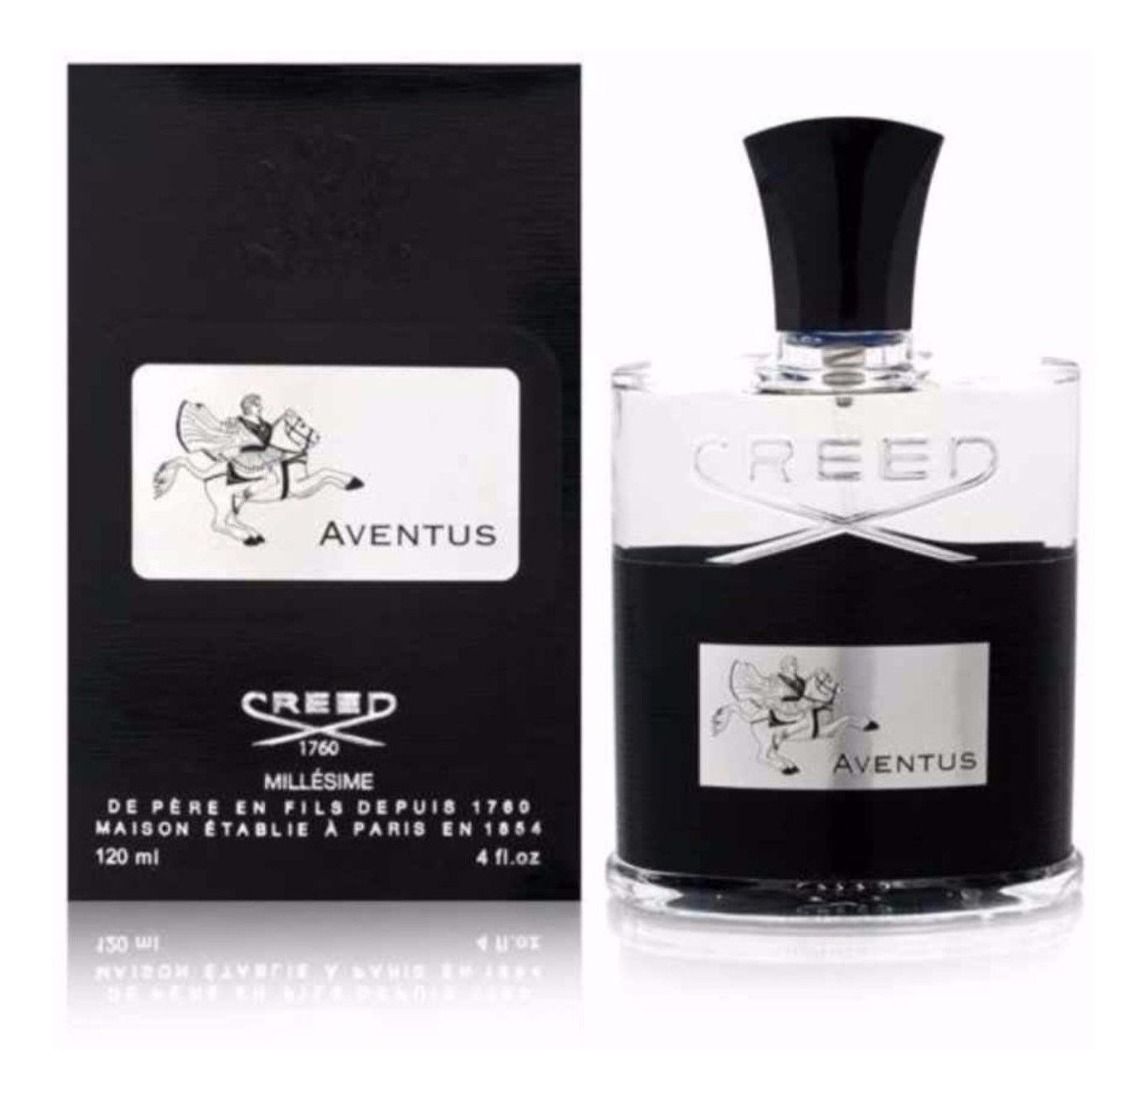 Perfume Loción Creed Aventus 120 Ml Hombre Original - $ 99.900 en